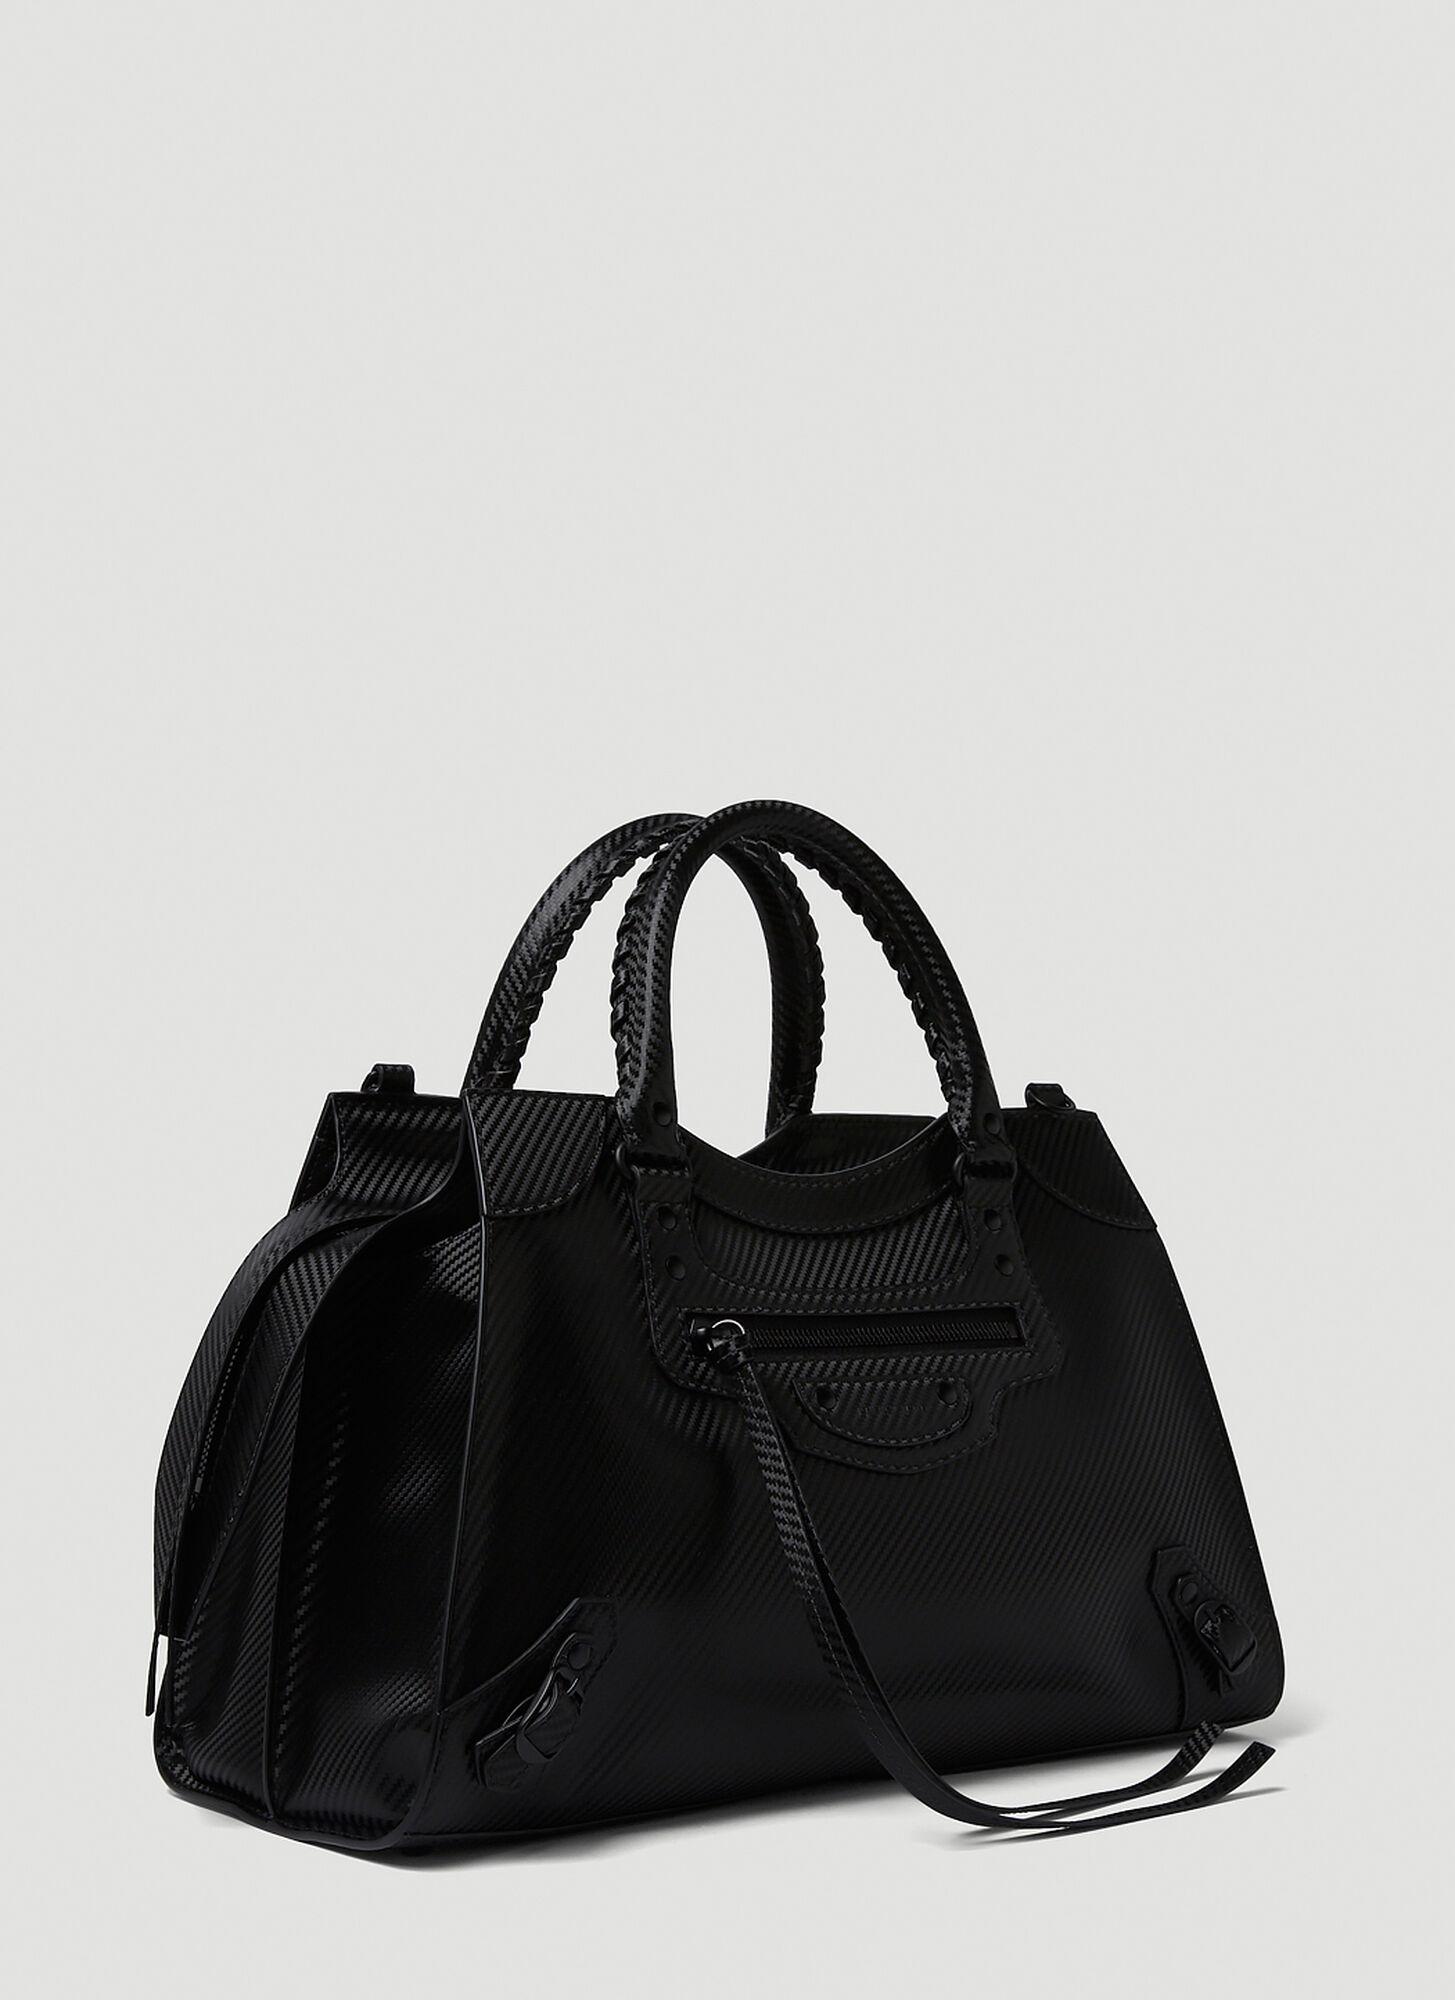 BALENCIAGA City Medium Bag in Black Leather  COCOON